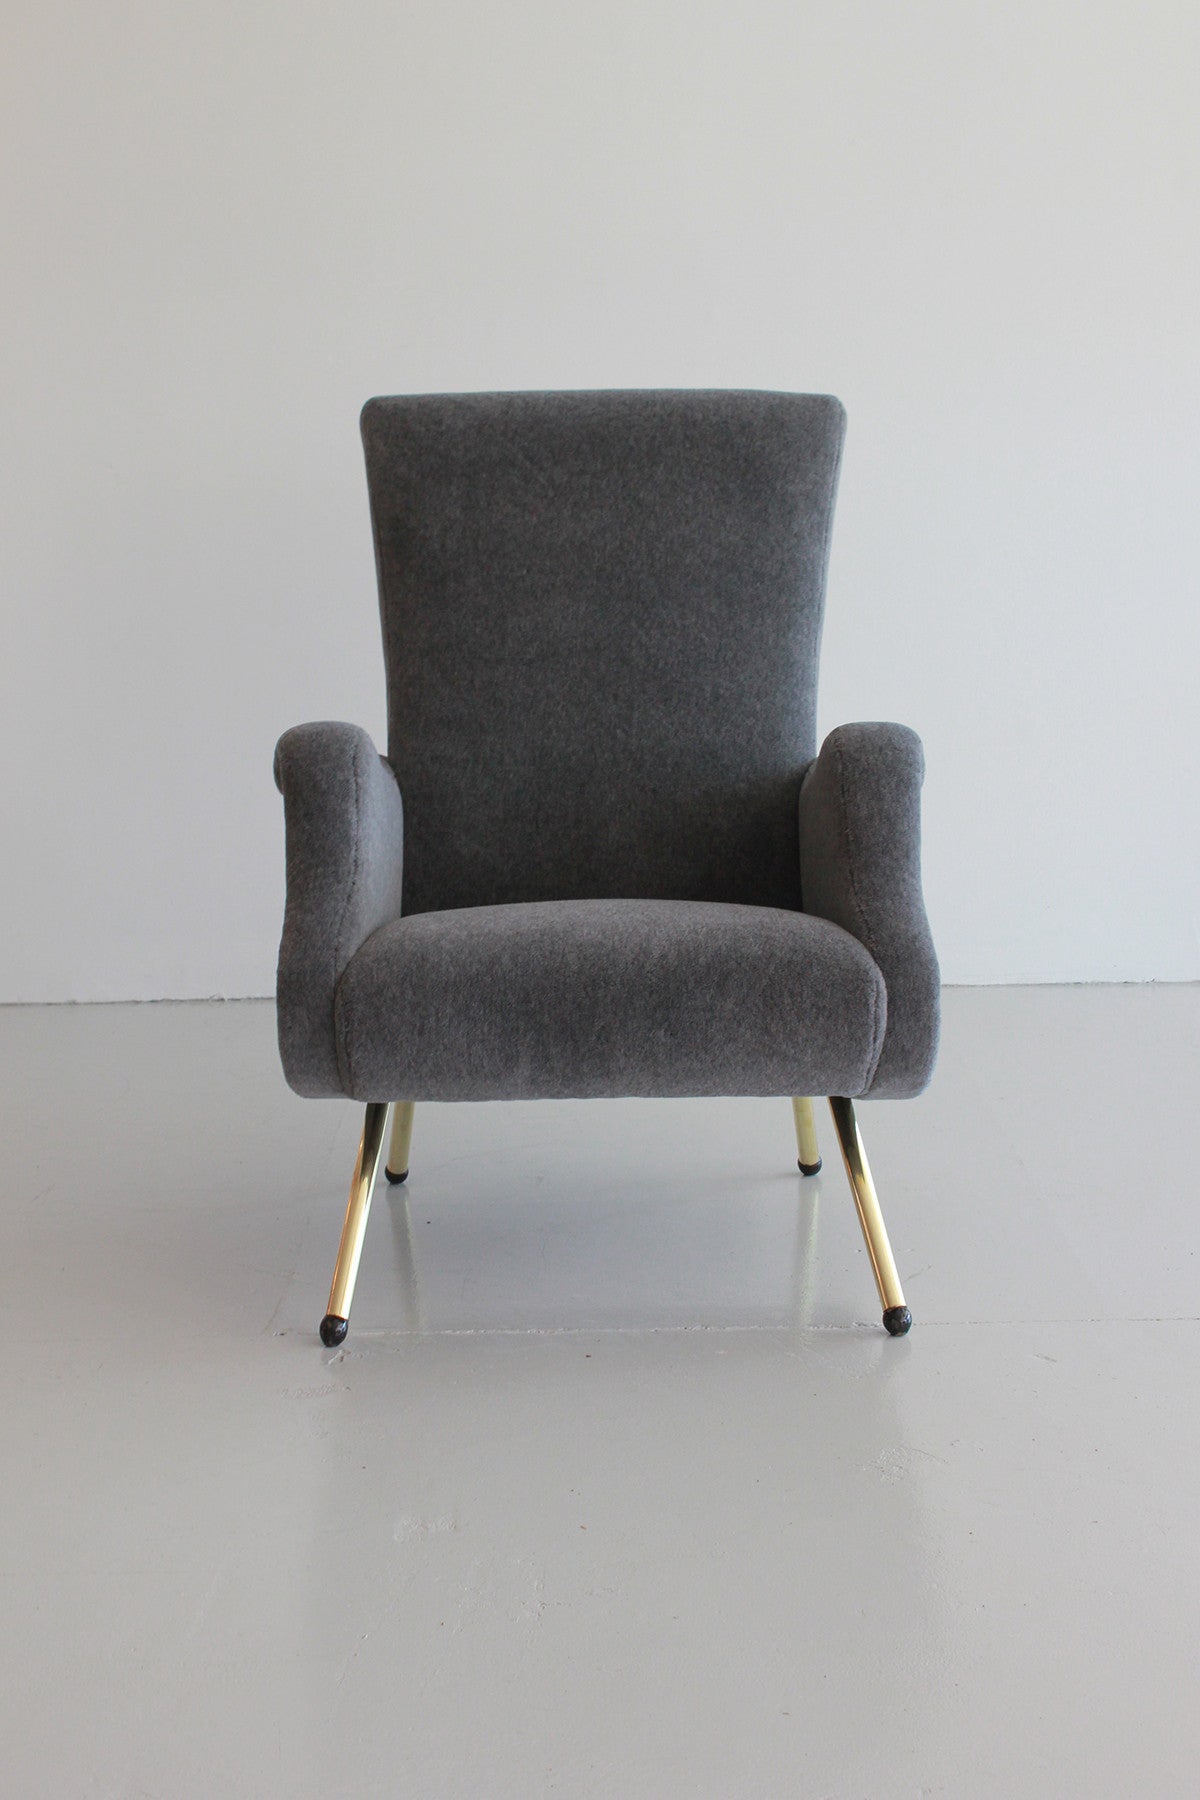 Italian Chairs Attributed To Marco Zanuso Orange Furniture Los